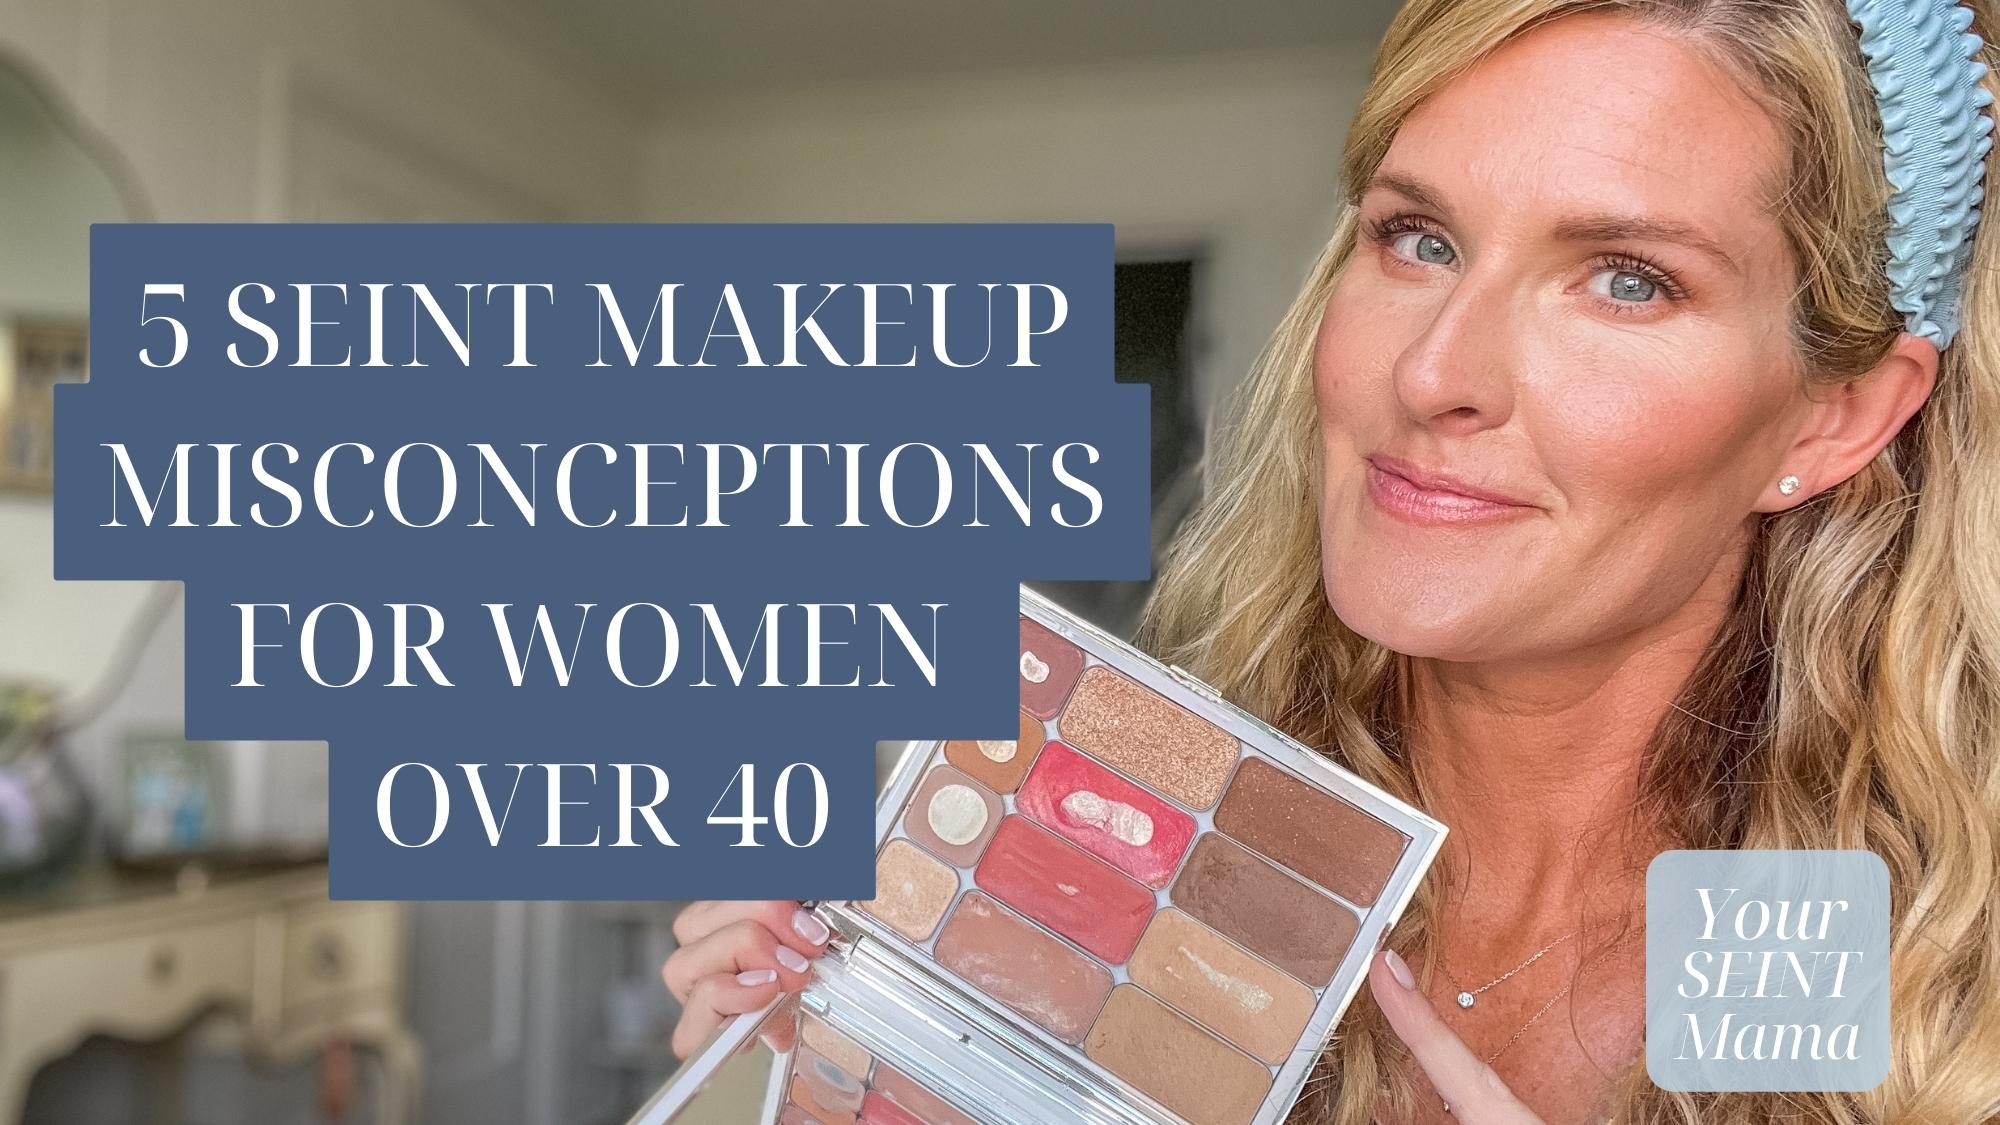 Seint Beauty Makeup Artist Heather K Burge - 5 Misconceptions About Seint Makeup for Mature Skin